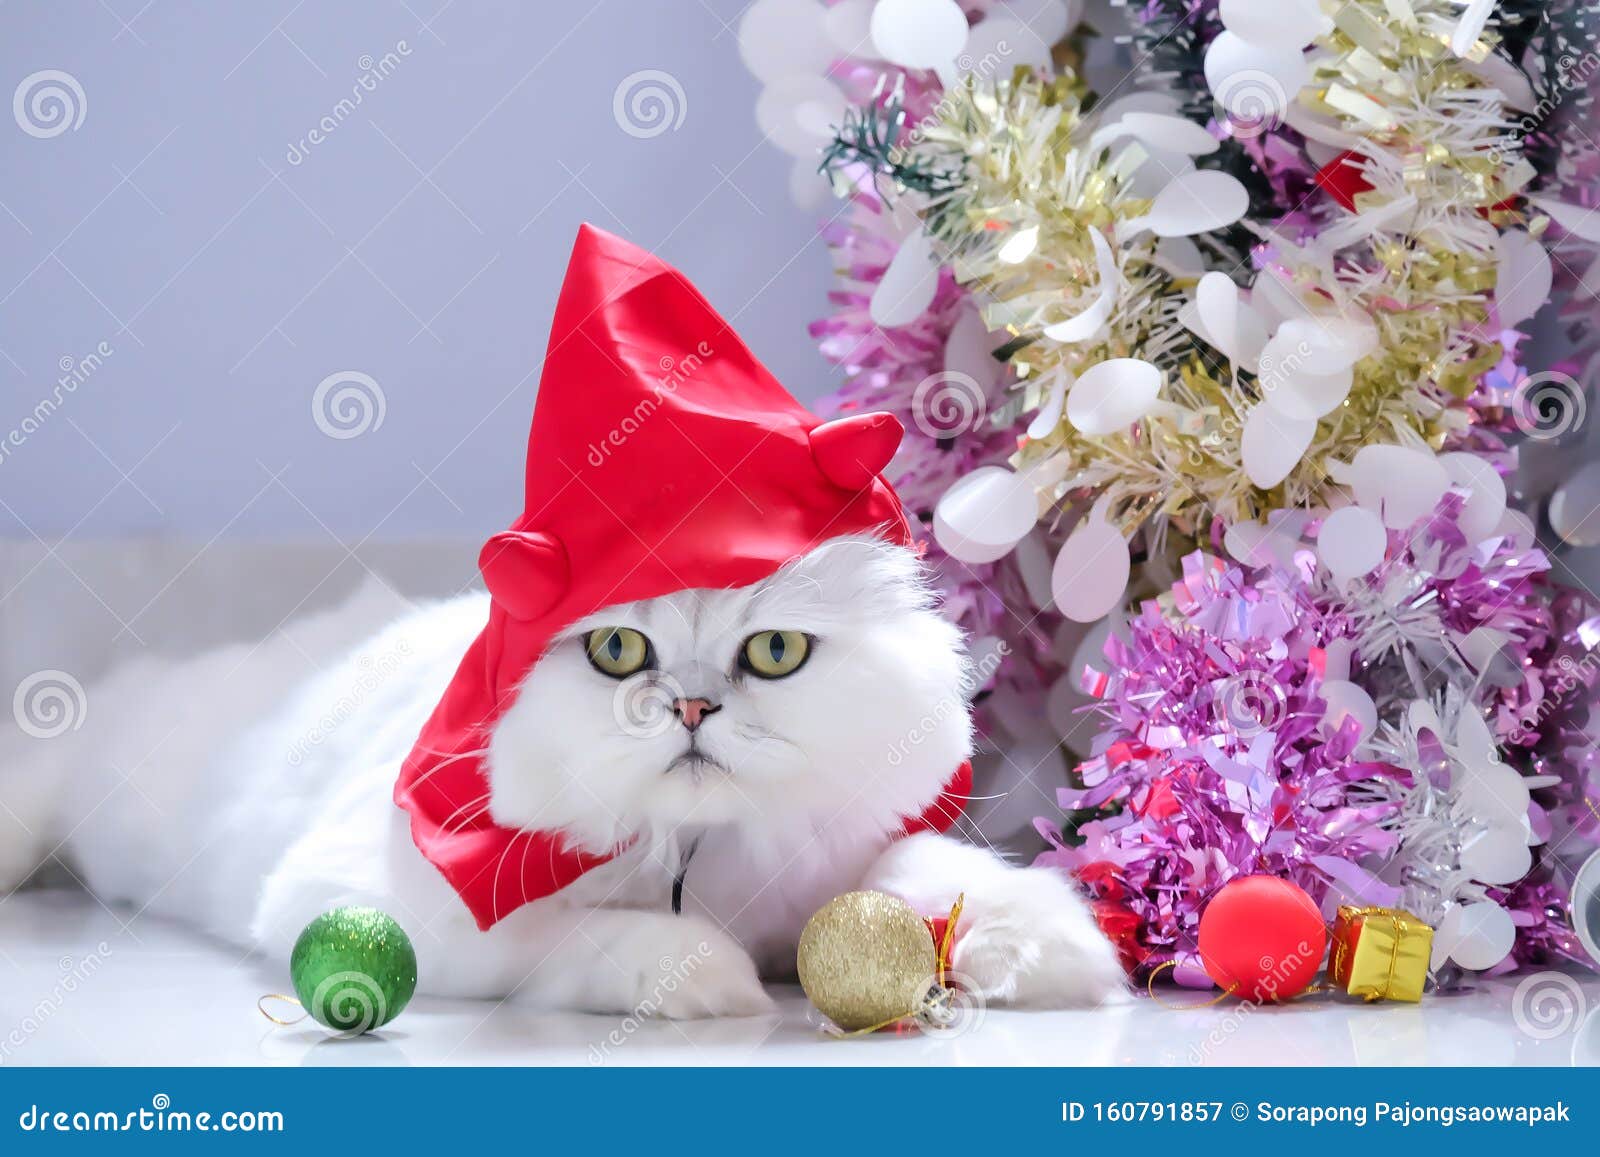 furry british white cat chinchilla cute cat.halloween cat with little devil hat